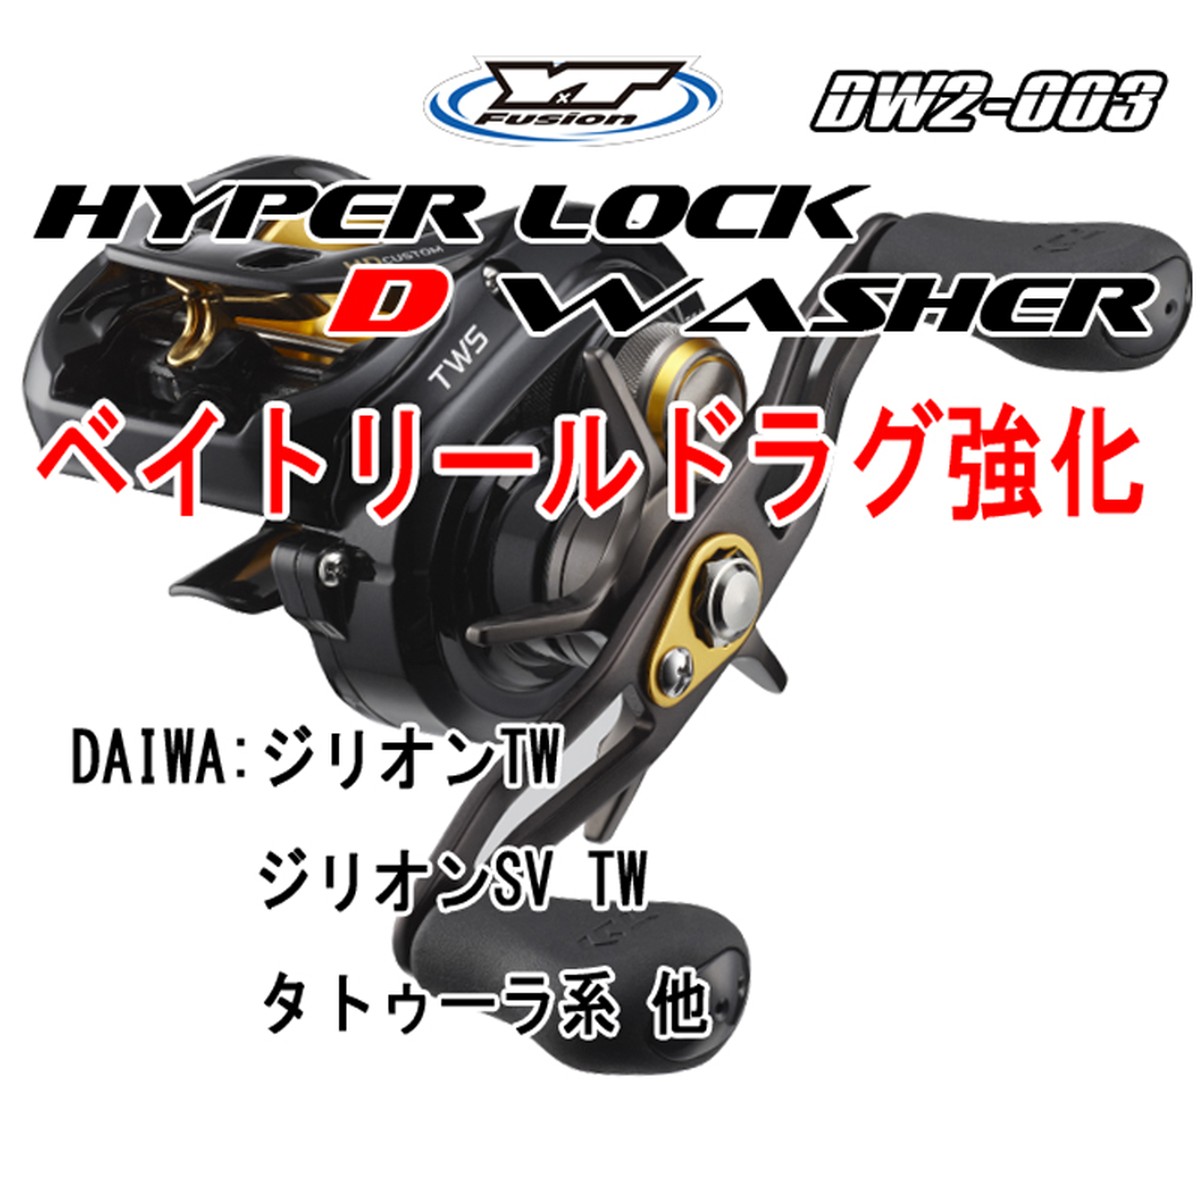 Dw2 003 ダイワ用 ドラグ強化ワッシャー Hyper Lock D Washer 3 Lecielstyle ルシエルスタイル